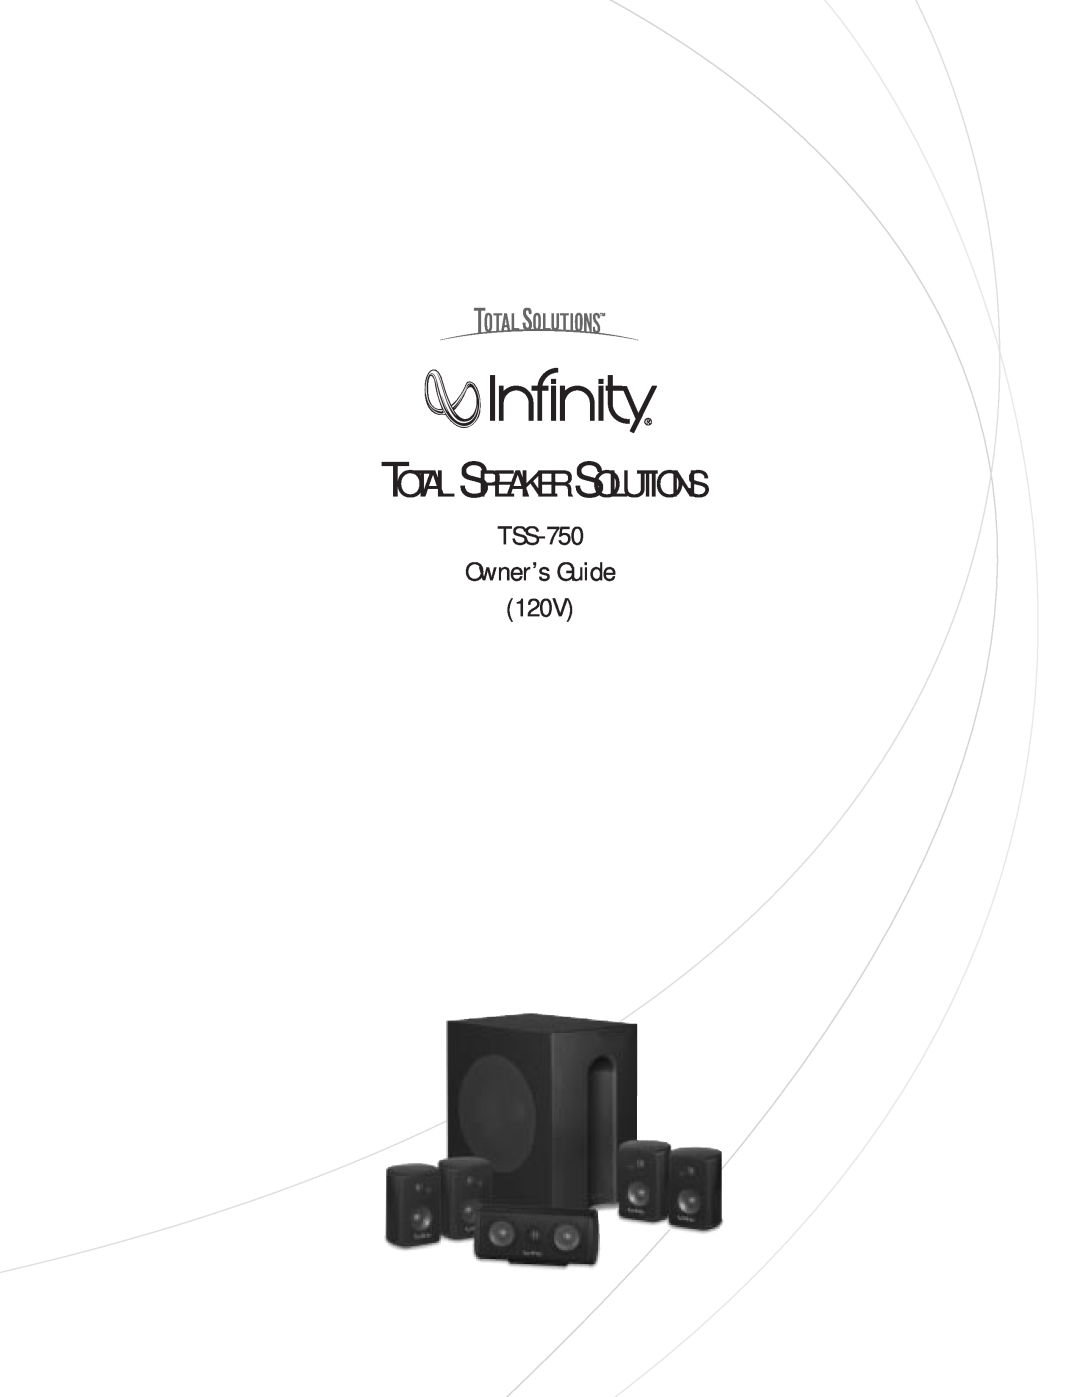 Infinity manual Total Speaker Solutions, TSS-750 Owner’s Guide 